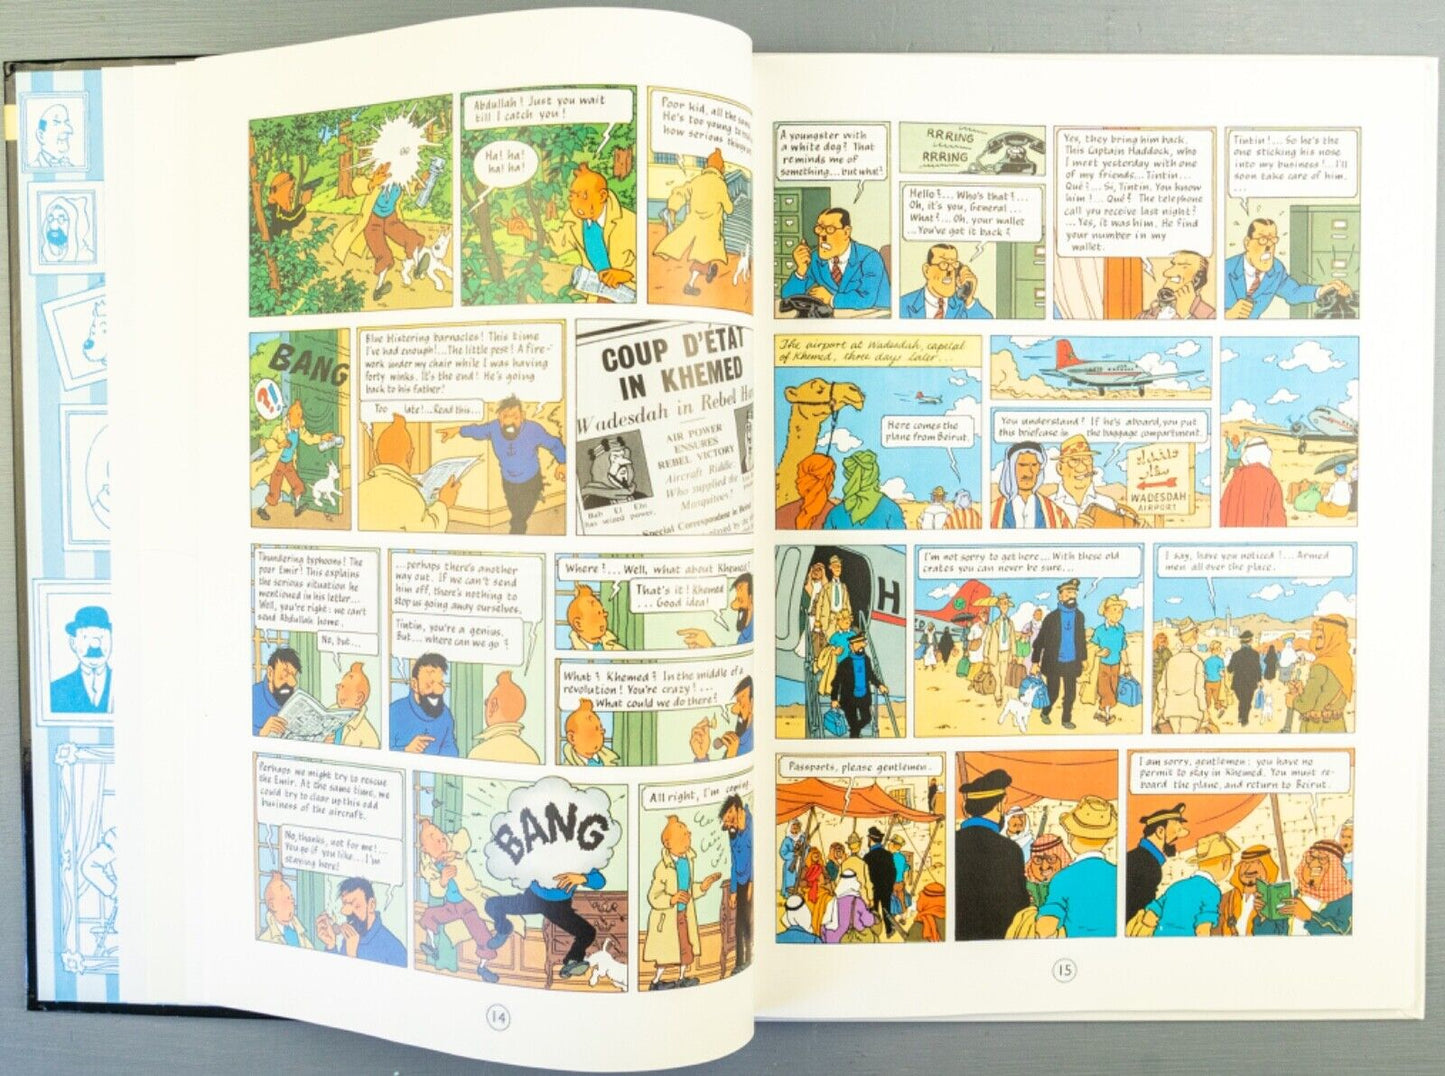 Tintin The Red Sea Sharks: Egmont 2000s Hardback Book UK Editions